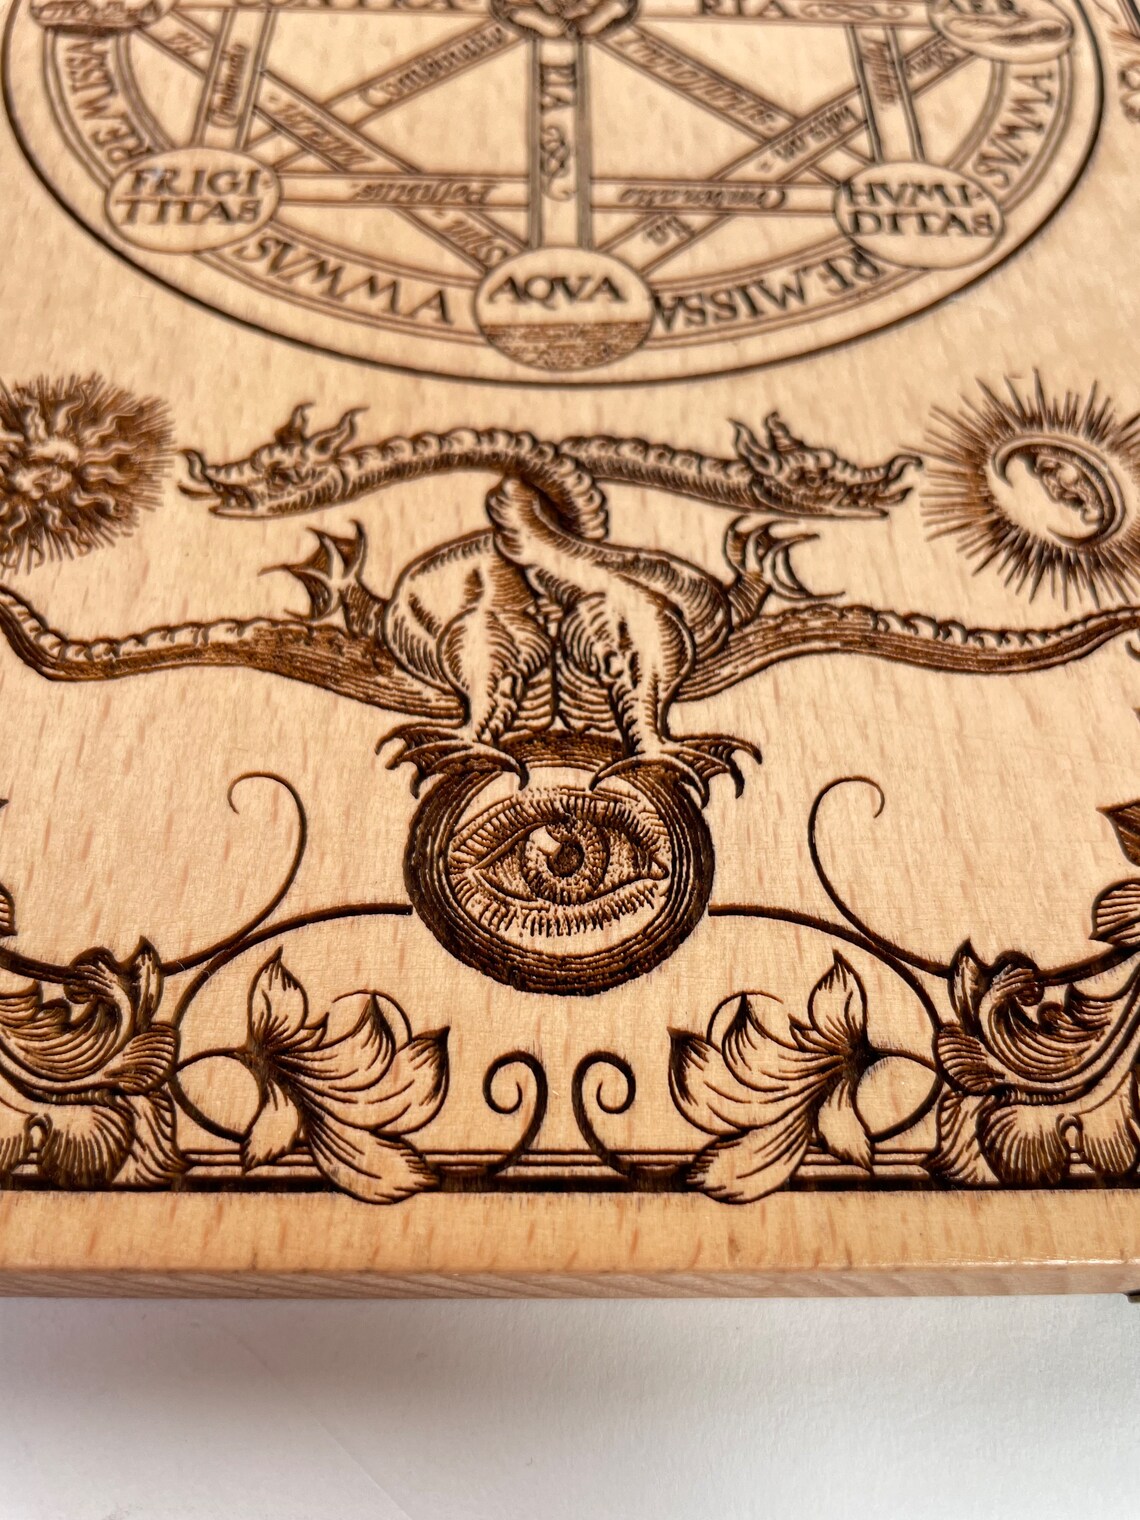 Alchemy art ars combinatoria wall decor engraved on wood, occult esoteric alchemical decor, alchemy symbols, magic, 8.6 inch, Kabbalah art.